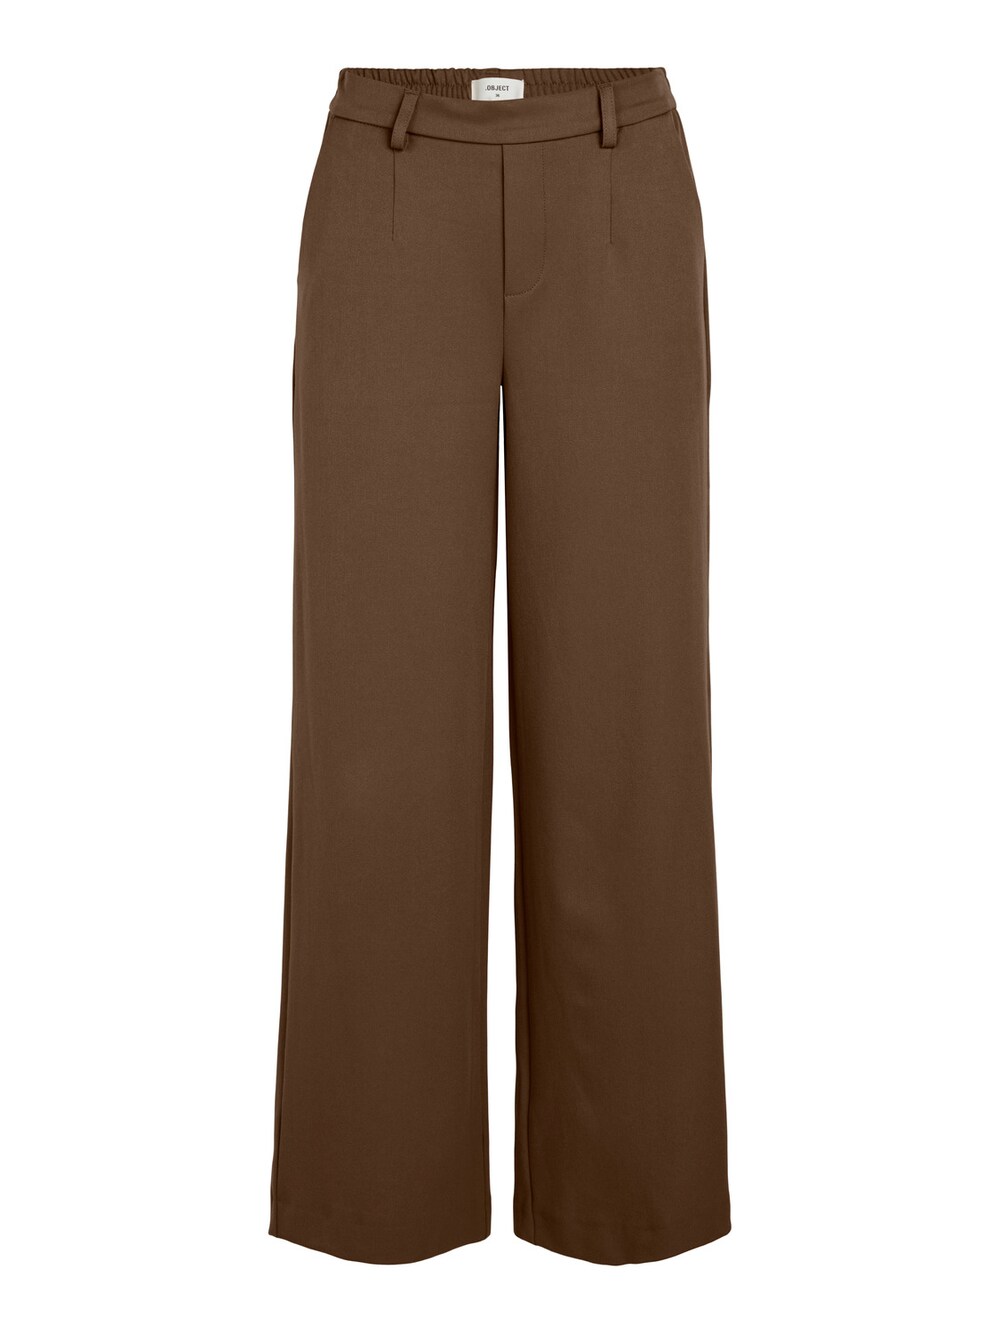 Широкие брюки со складками спереди Object Lisa, коричневый